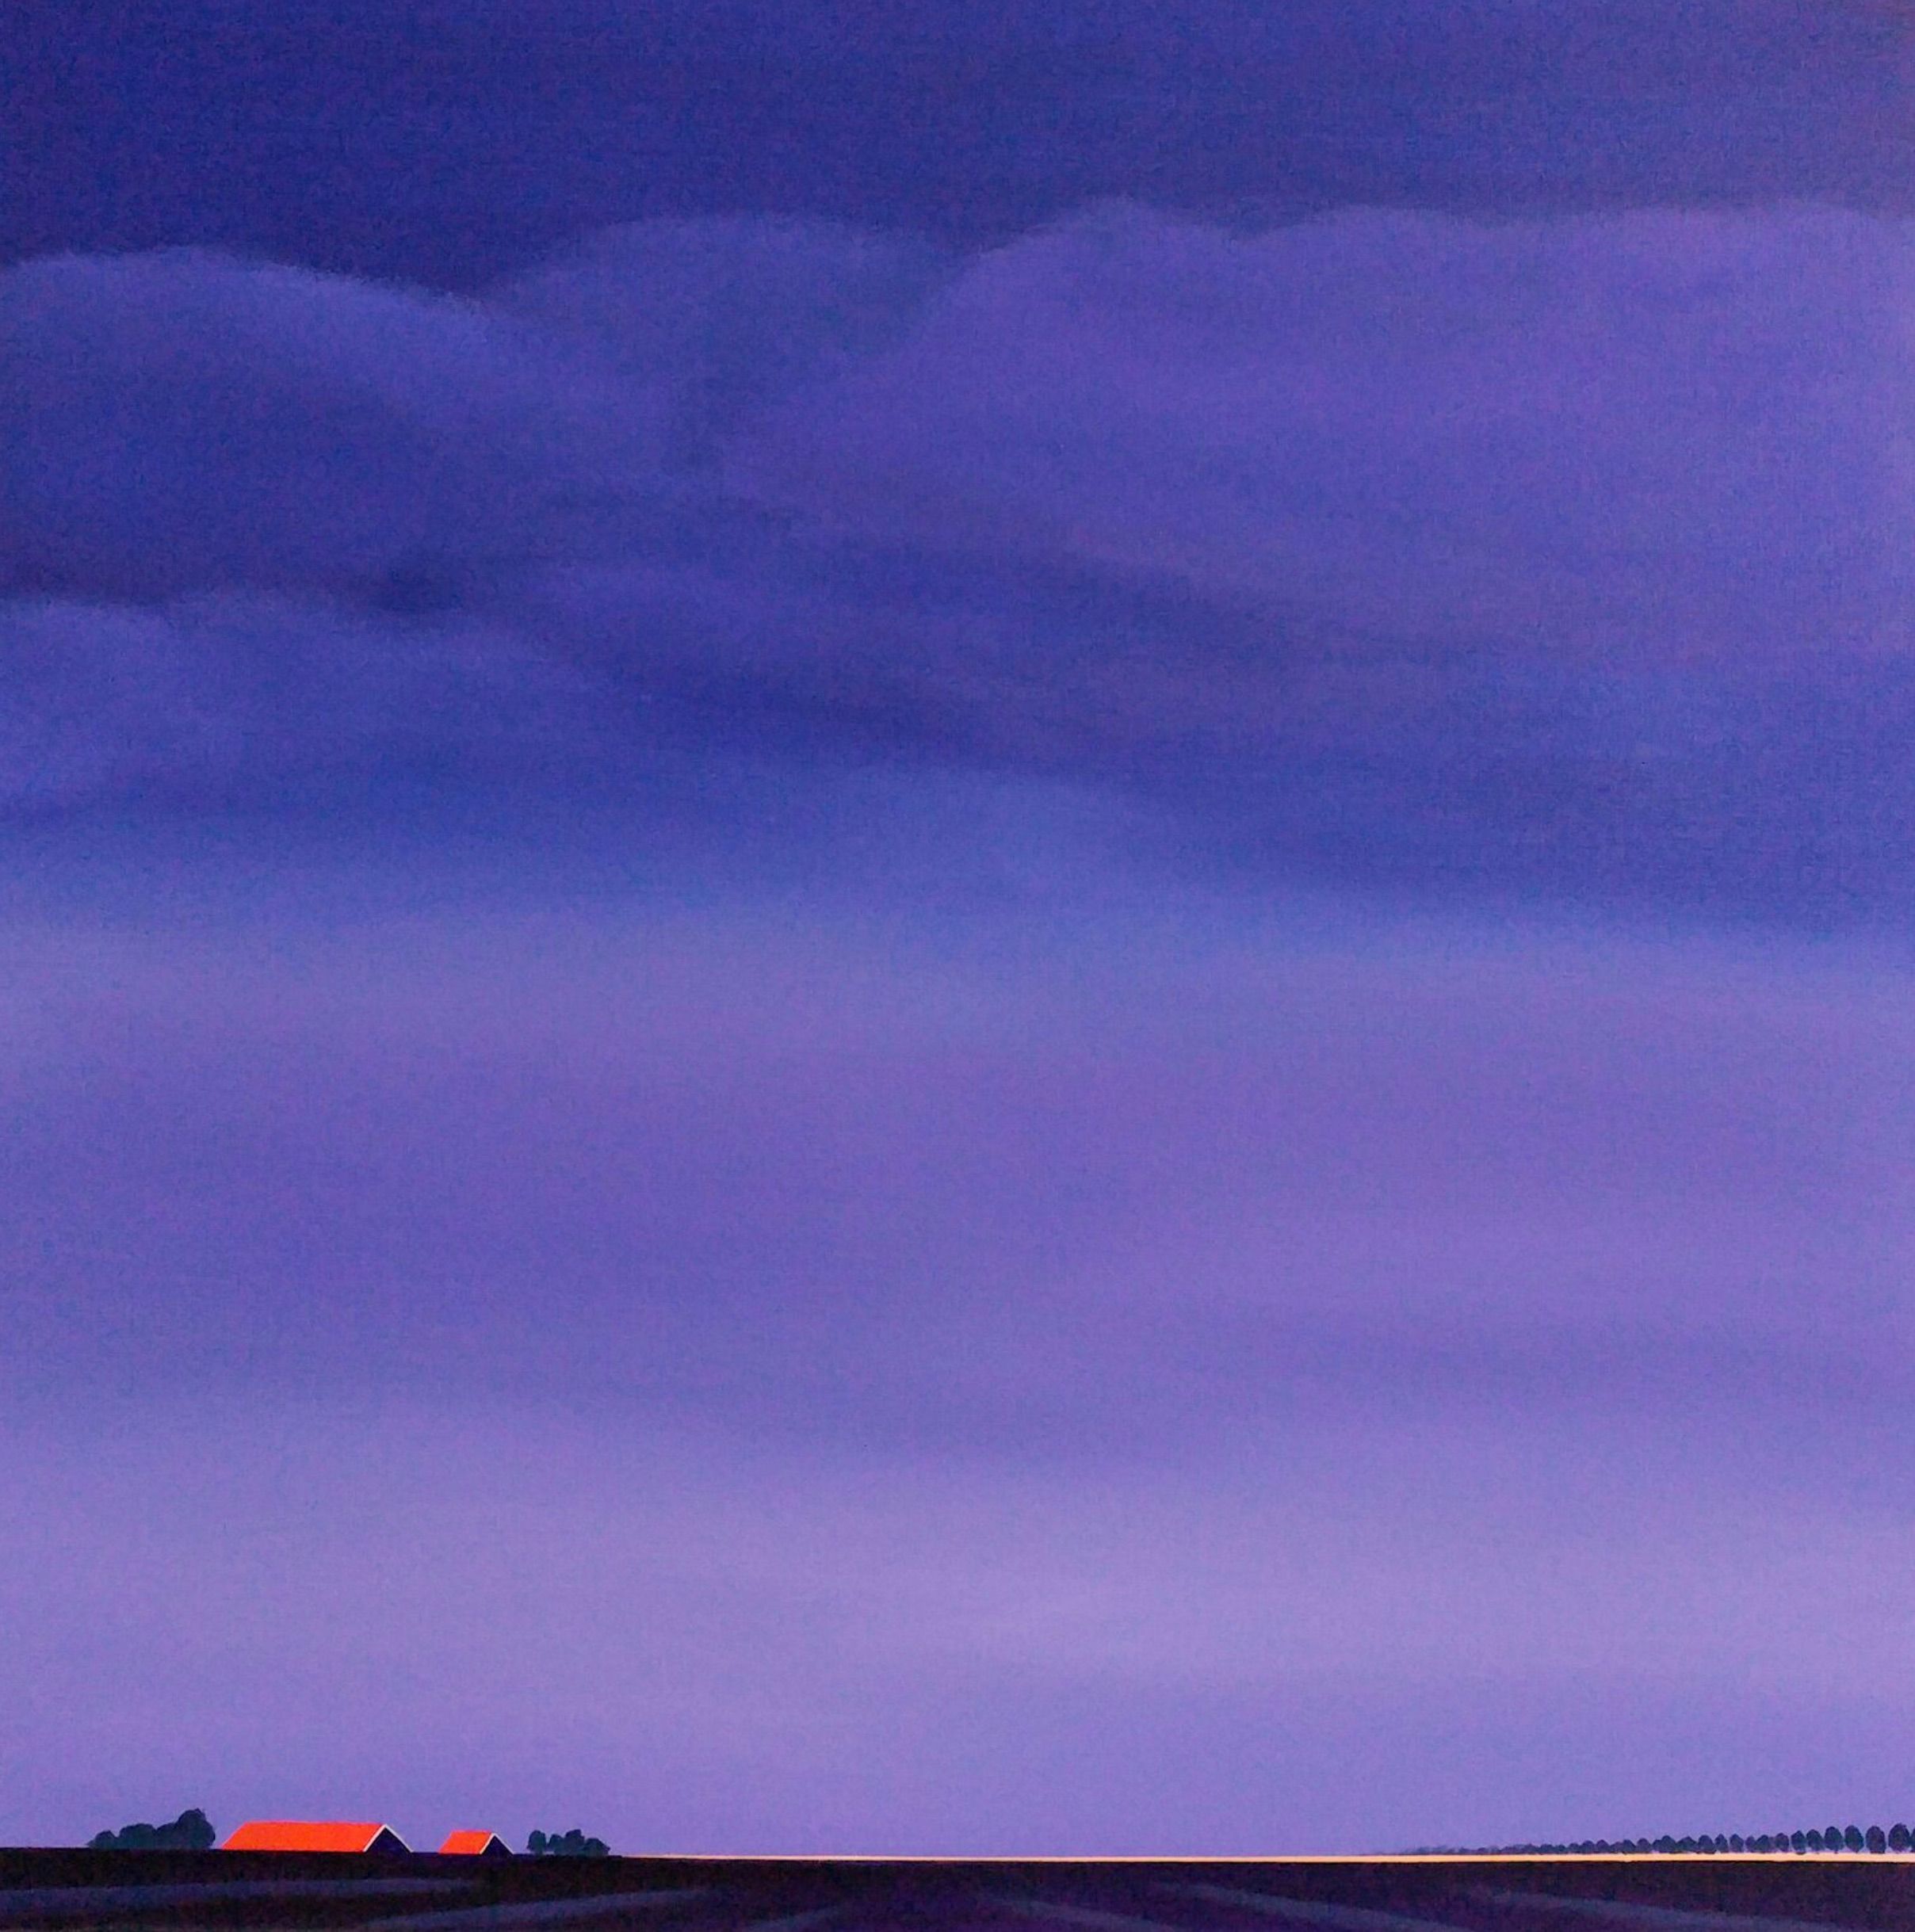 Nelly van Nieuwenhuijzen的 "紫色的夜晚 "画作展示了泽兰的风景。最后的阳光将地平线染成金色/紫色，屋顶则是火红的。